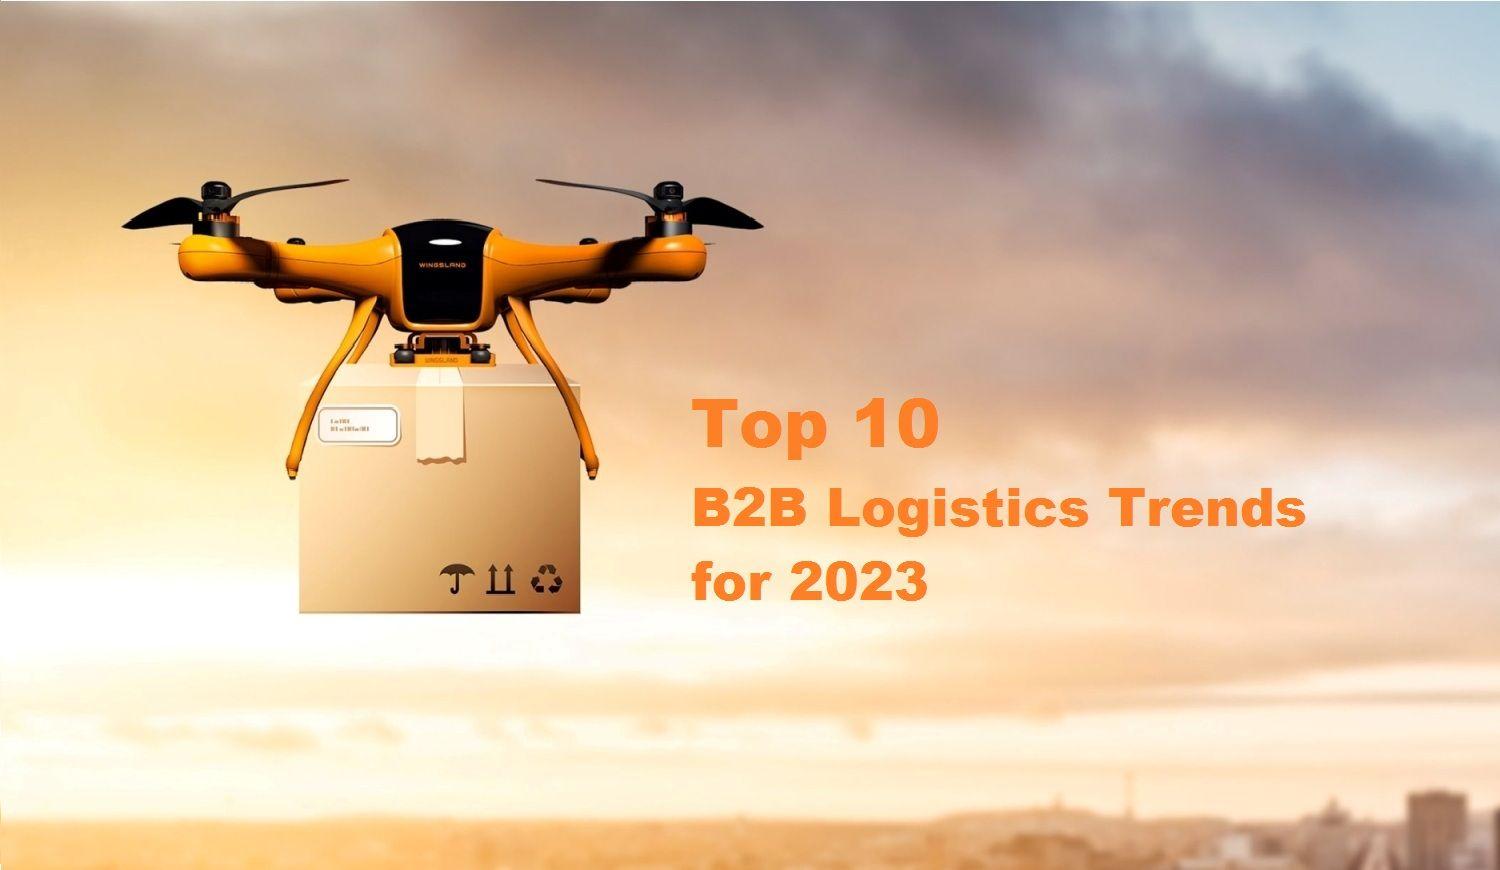 Top 10 B2B Logistics Trends